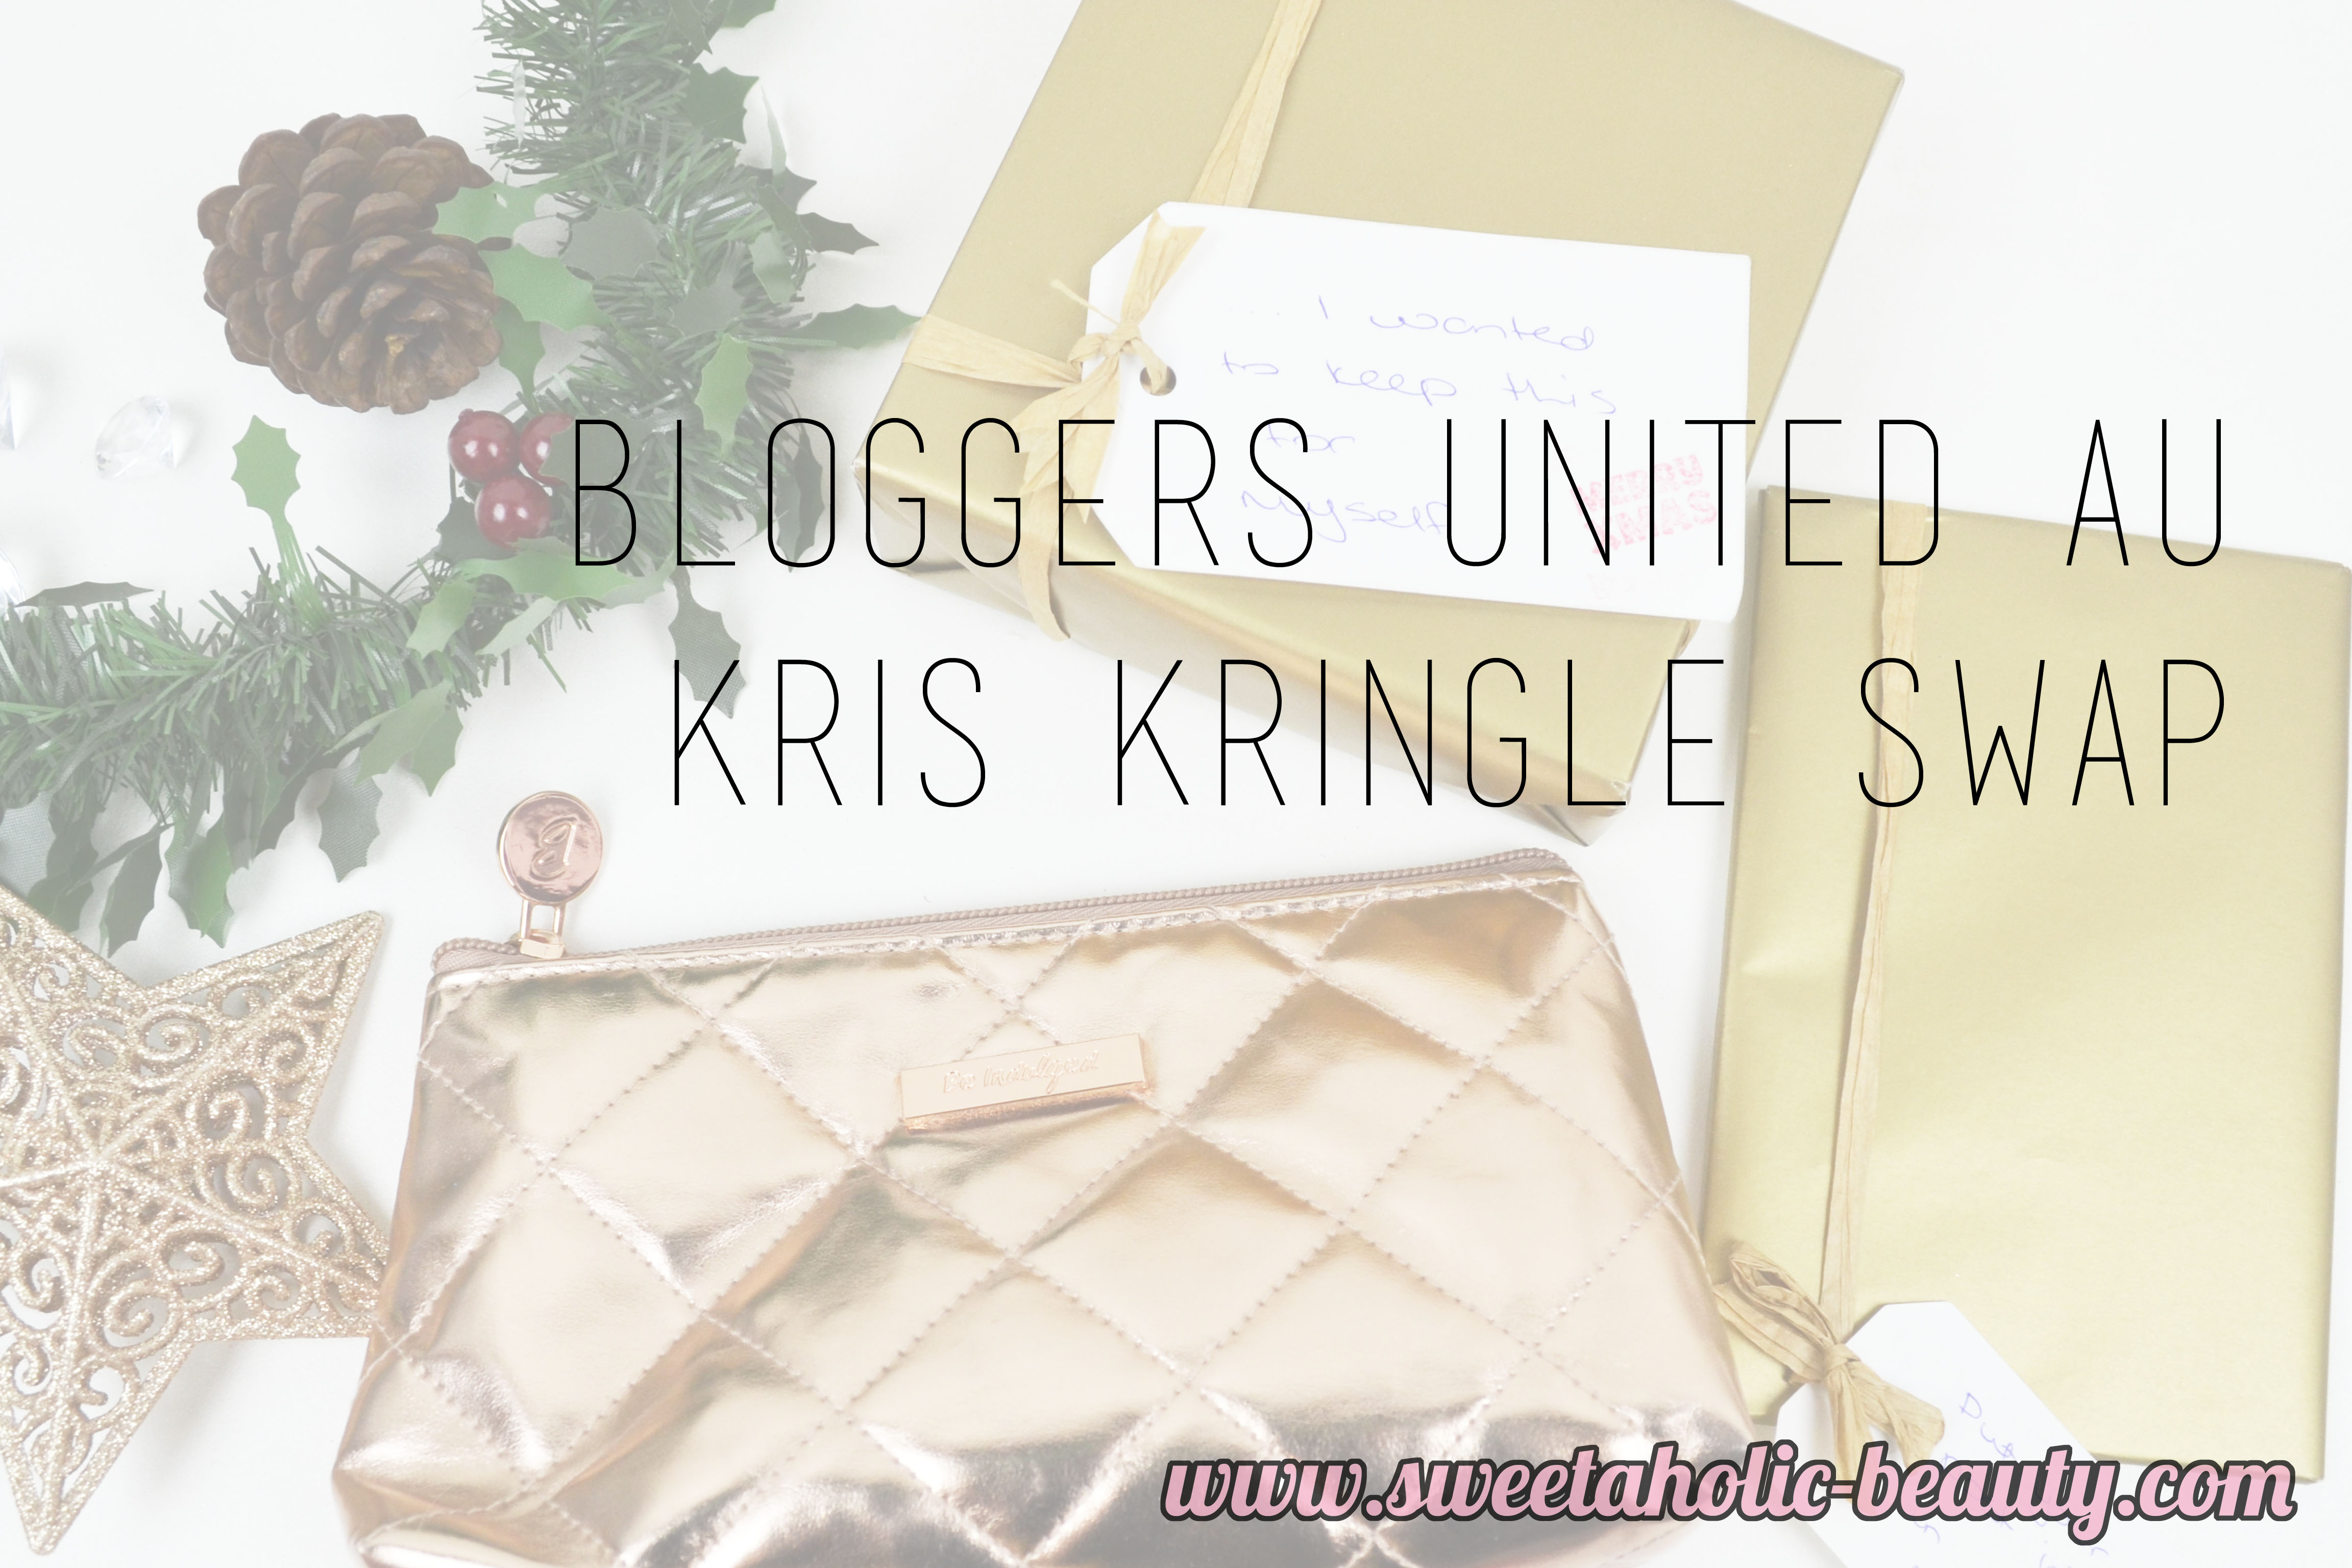 Bloggers United AU Kris Kringle Swap - Sweetaholic Beauty